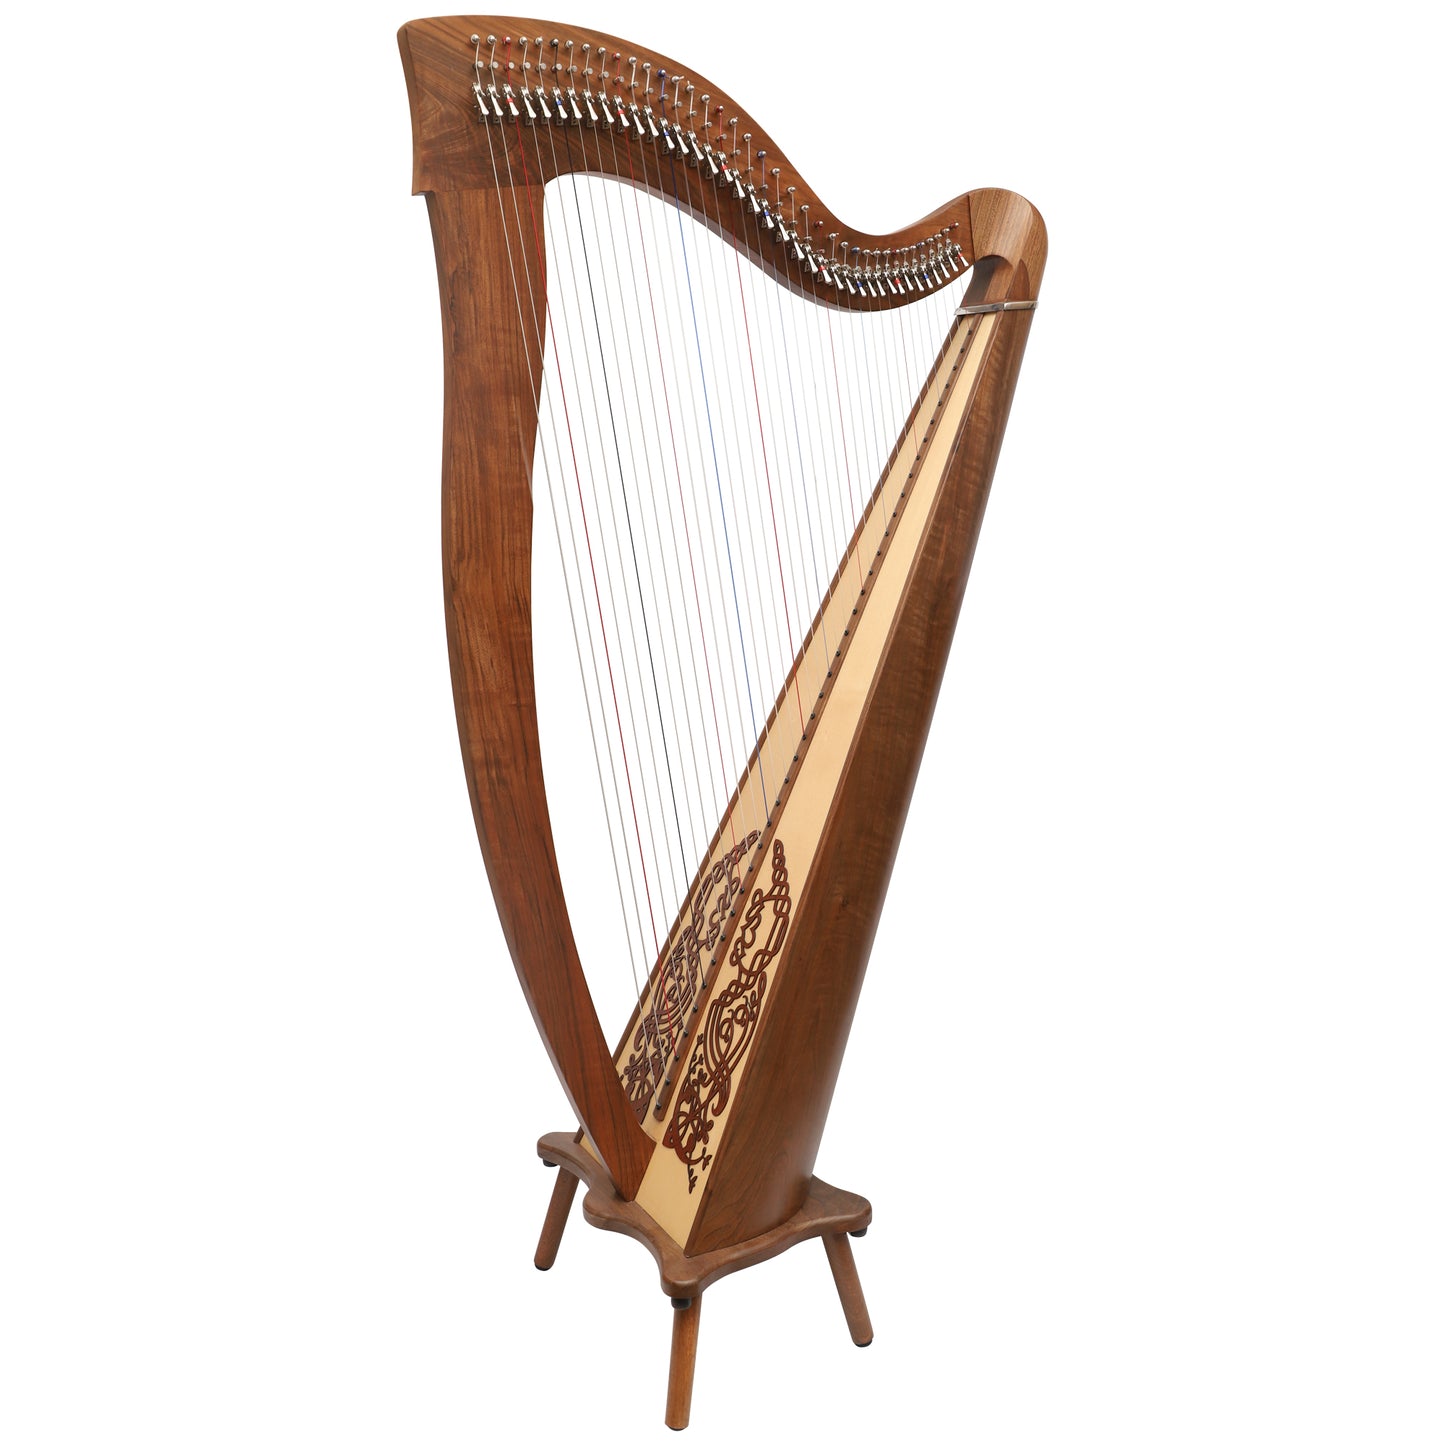 Mchugh Ayra Harp 38 Strings Walnut